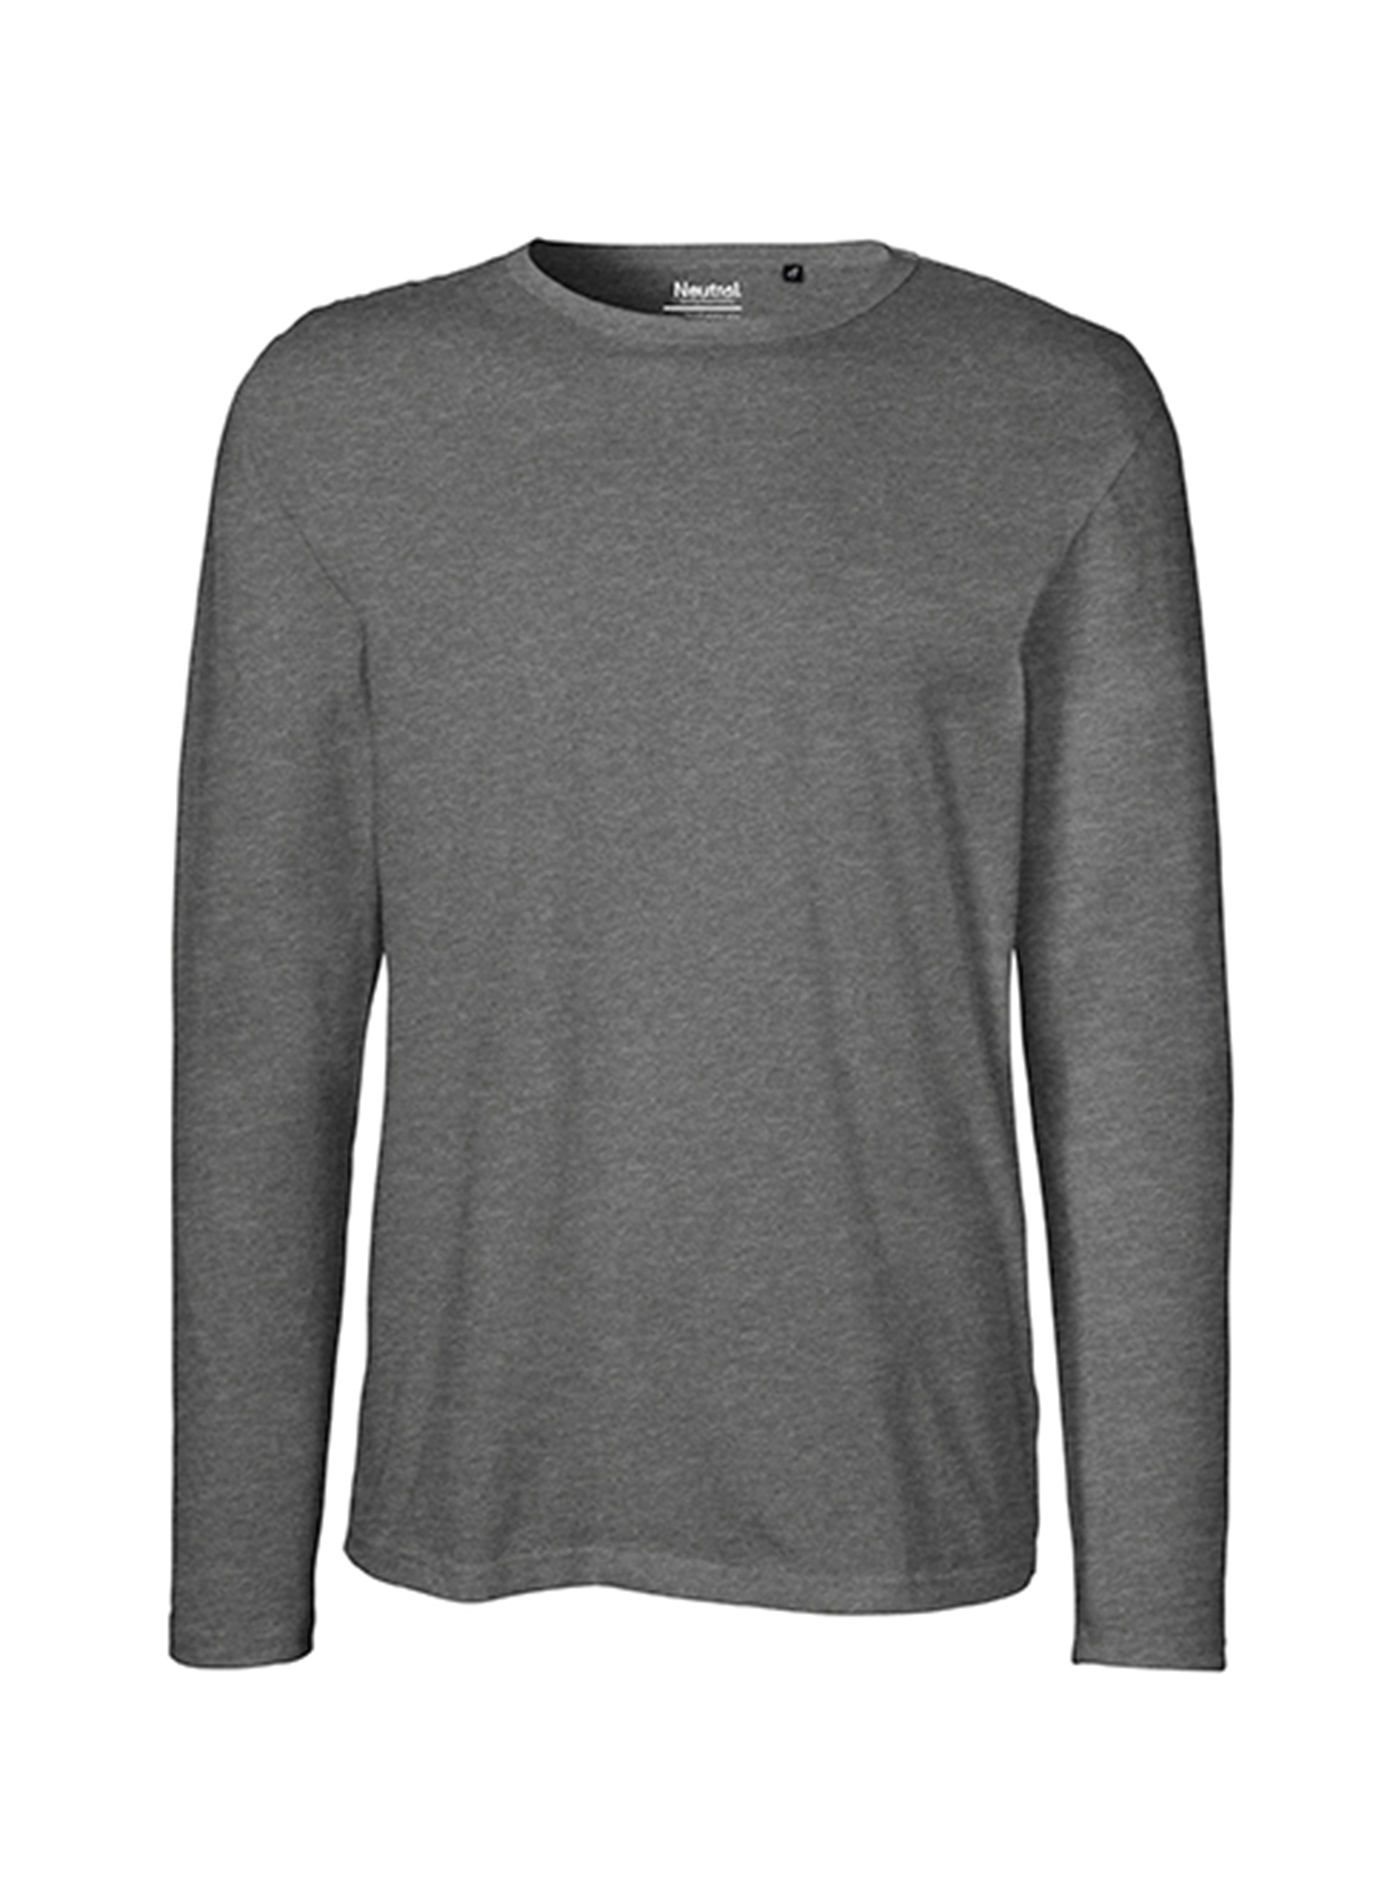 Pánské tričko s dlouhým rukávem Neutral - Tmavě šedá XL